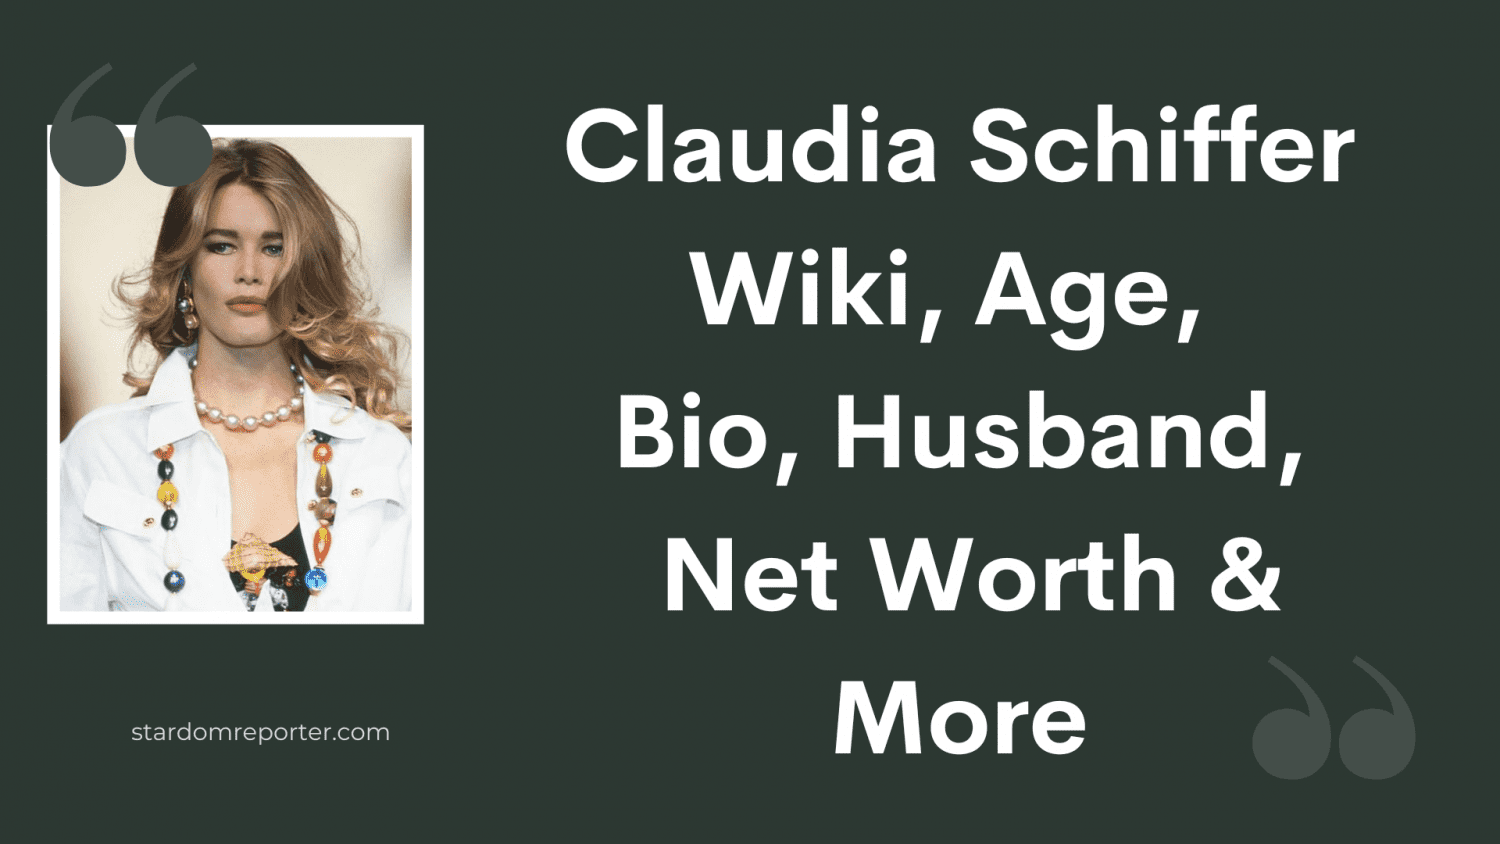 Claudia Schiffer Wiki, Age, Bio, Husband, Net Worth & More - 1